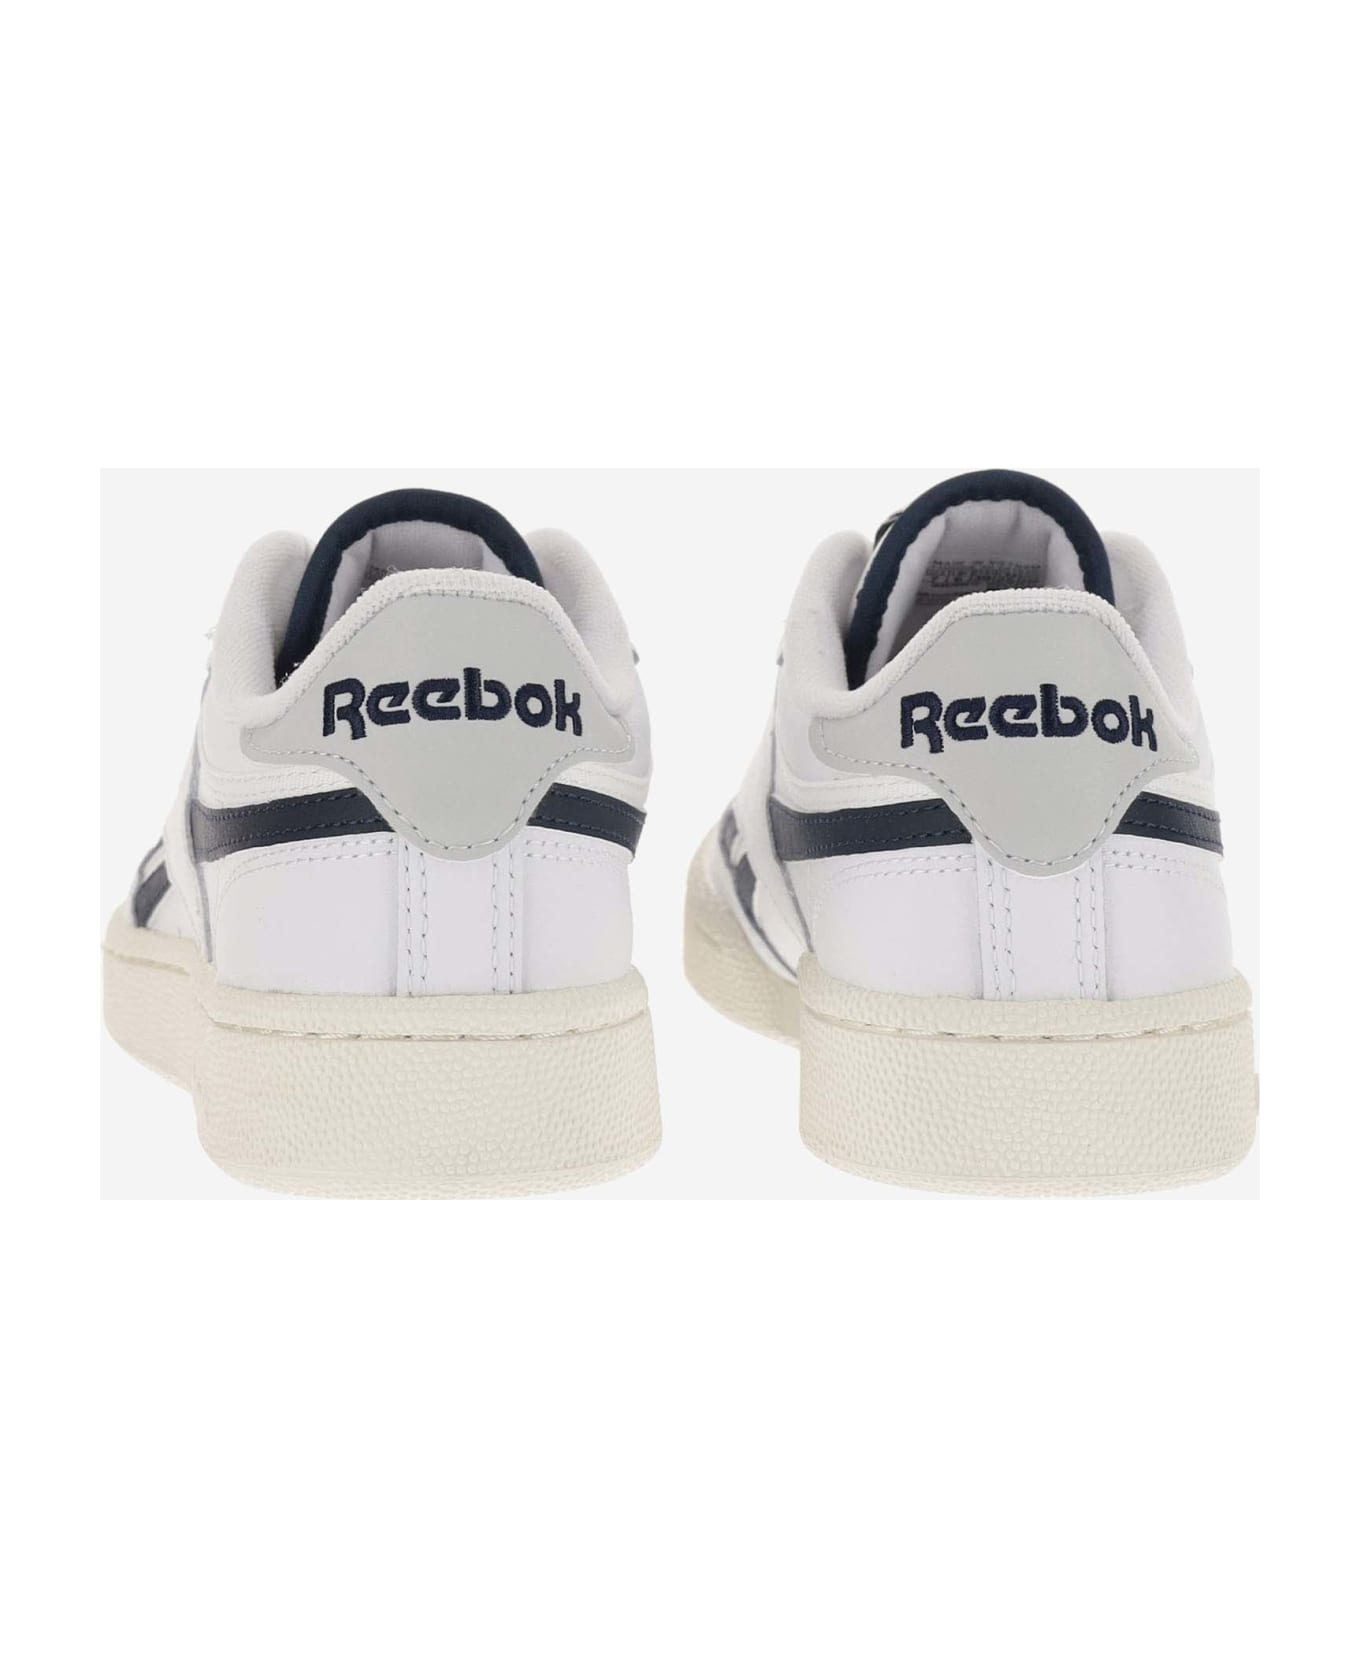 Reebok Club C Revenge Leather Sneakers - White